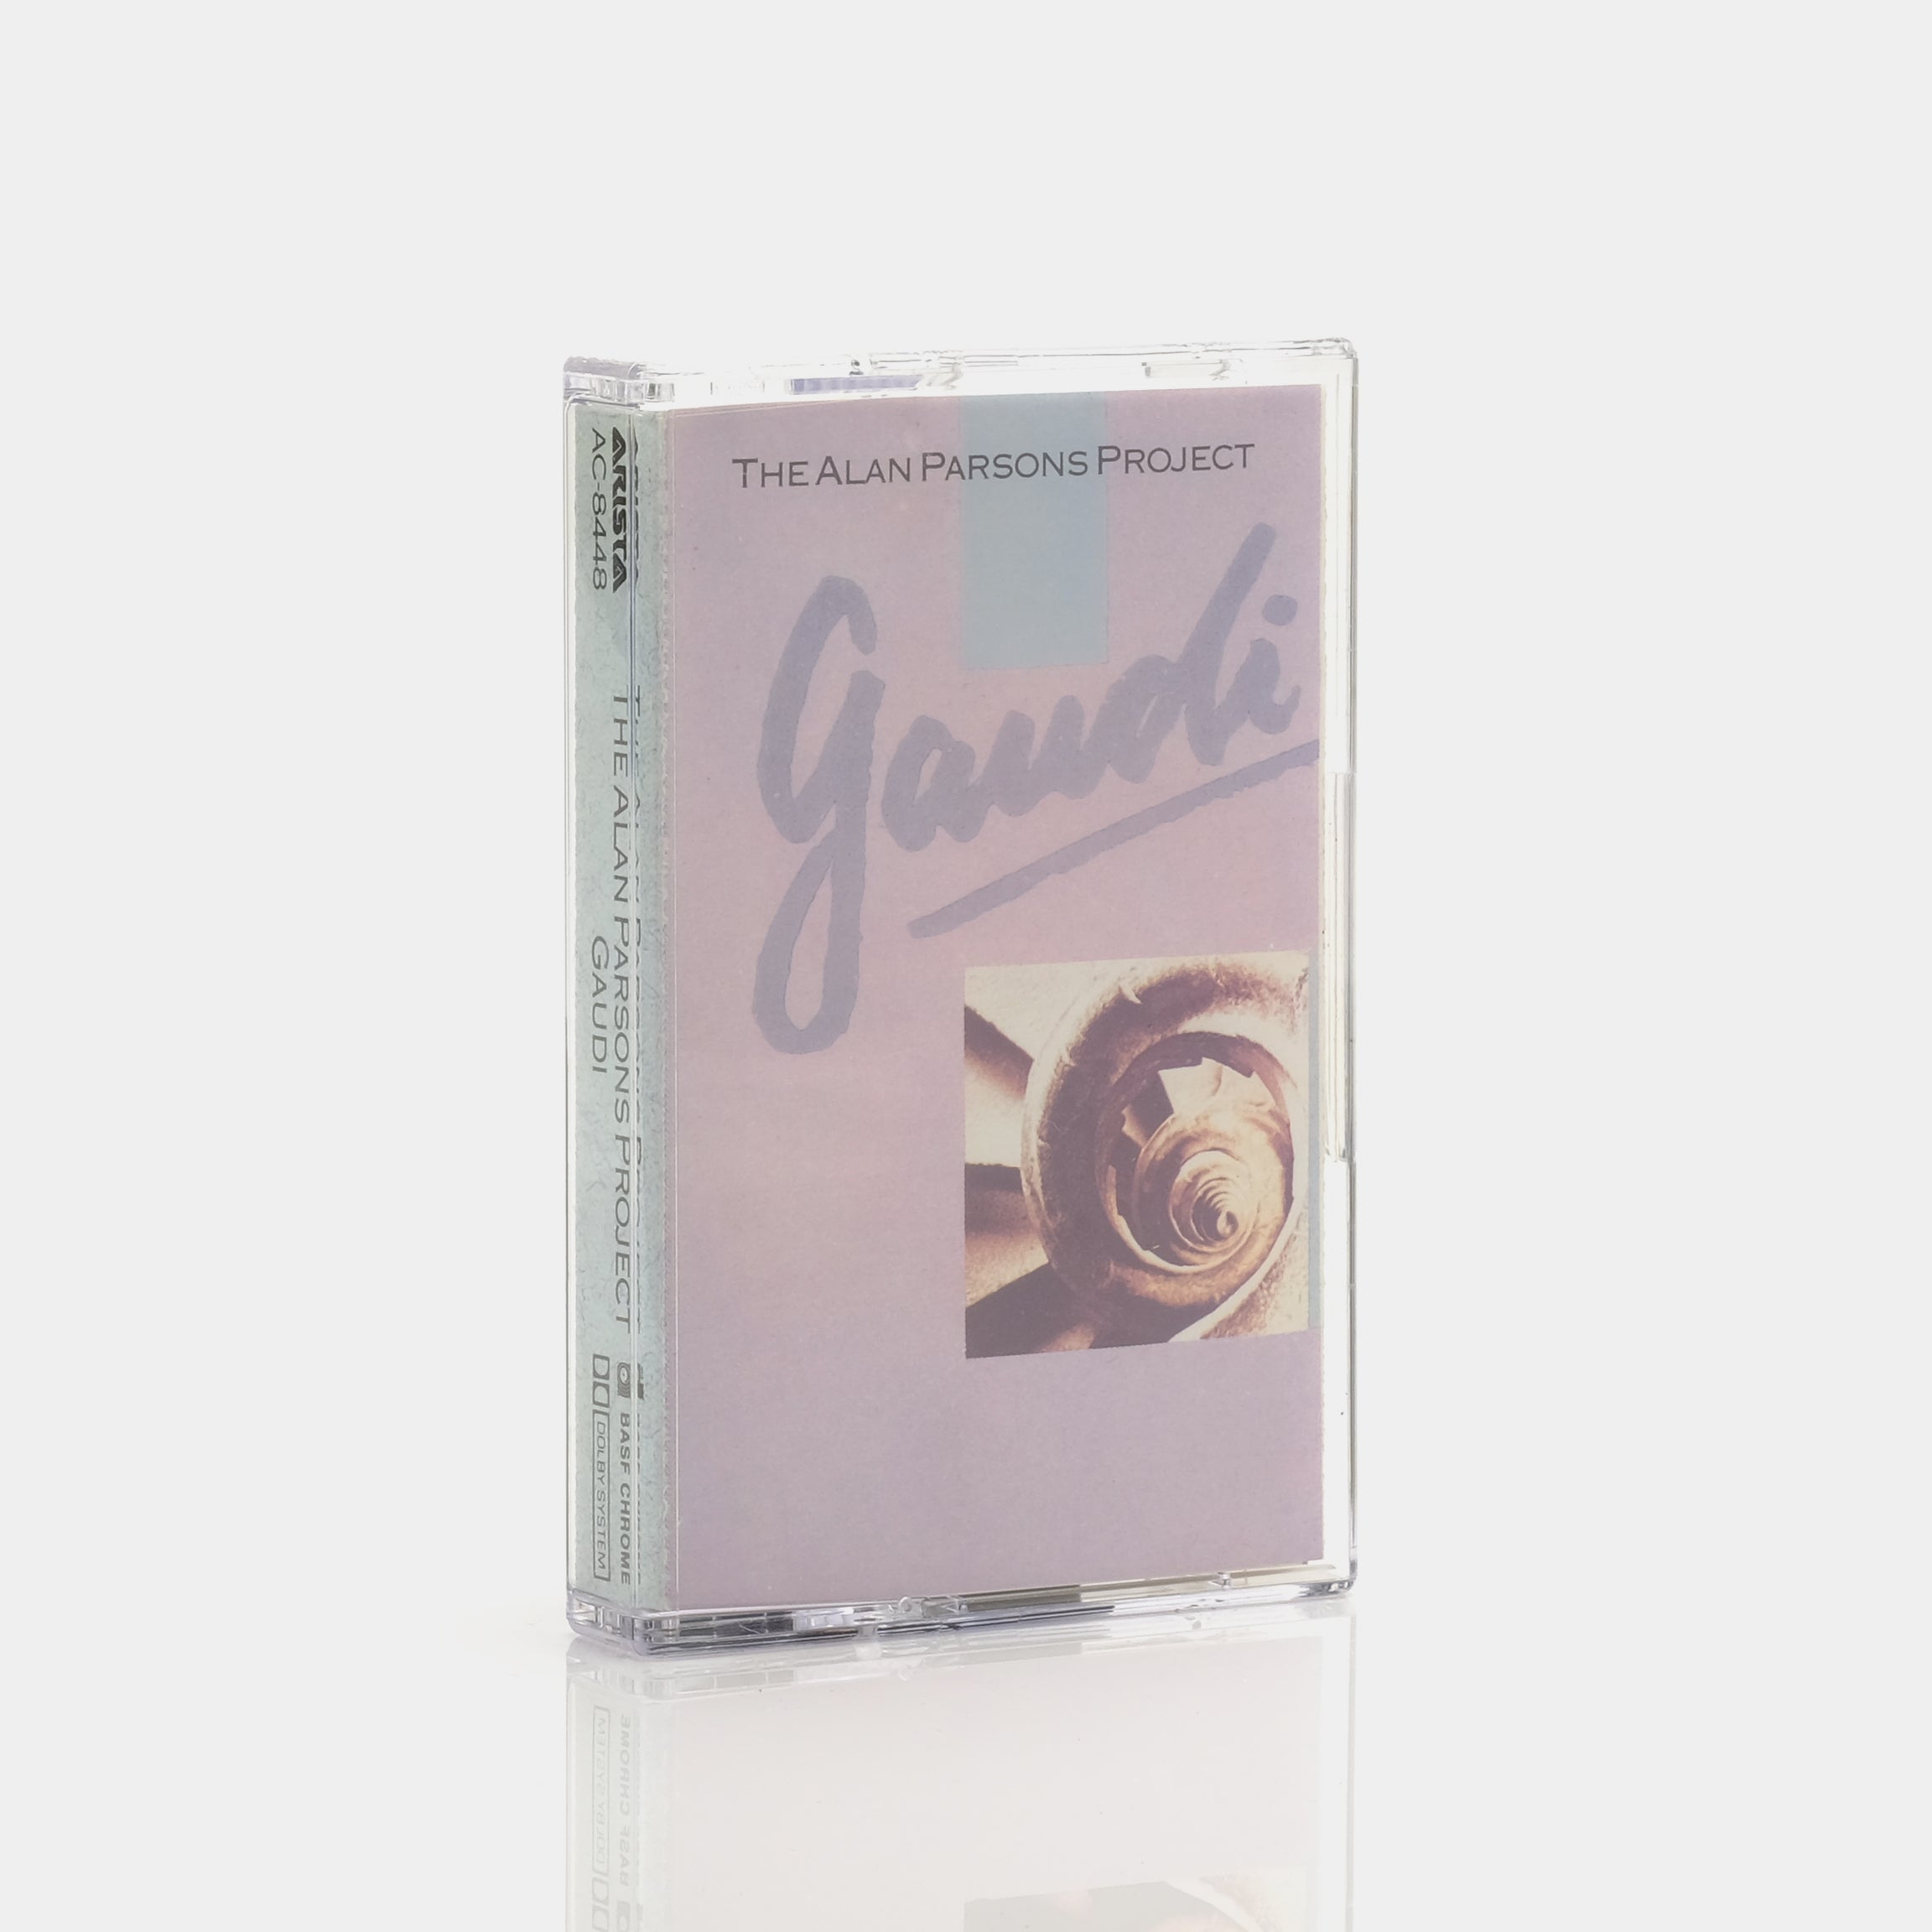 The Alan Parsons Project - Gaudi Cassette Tape